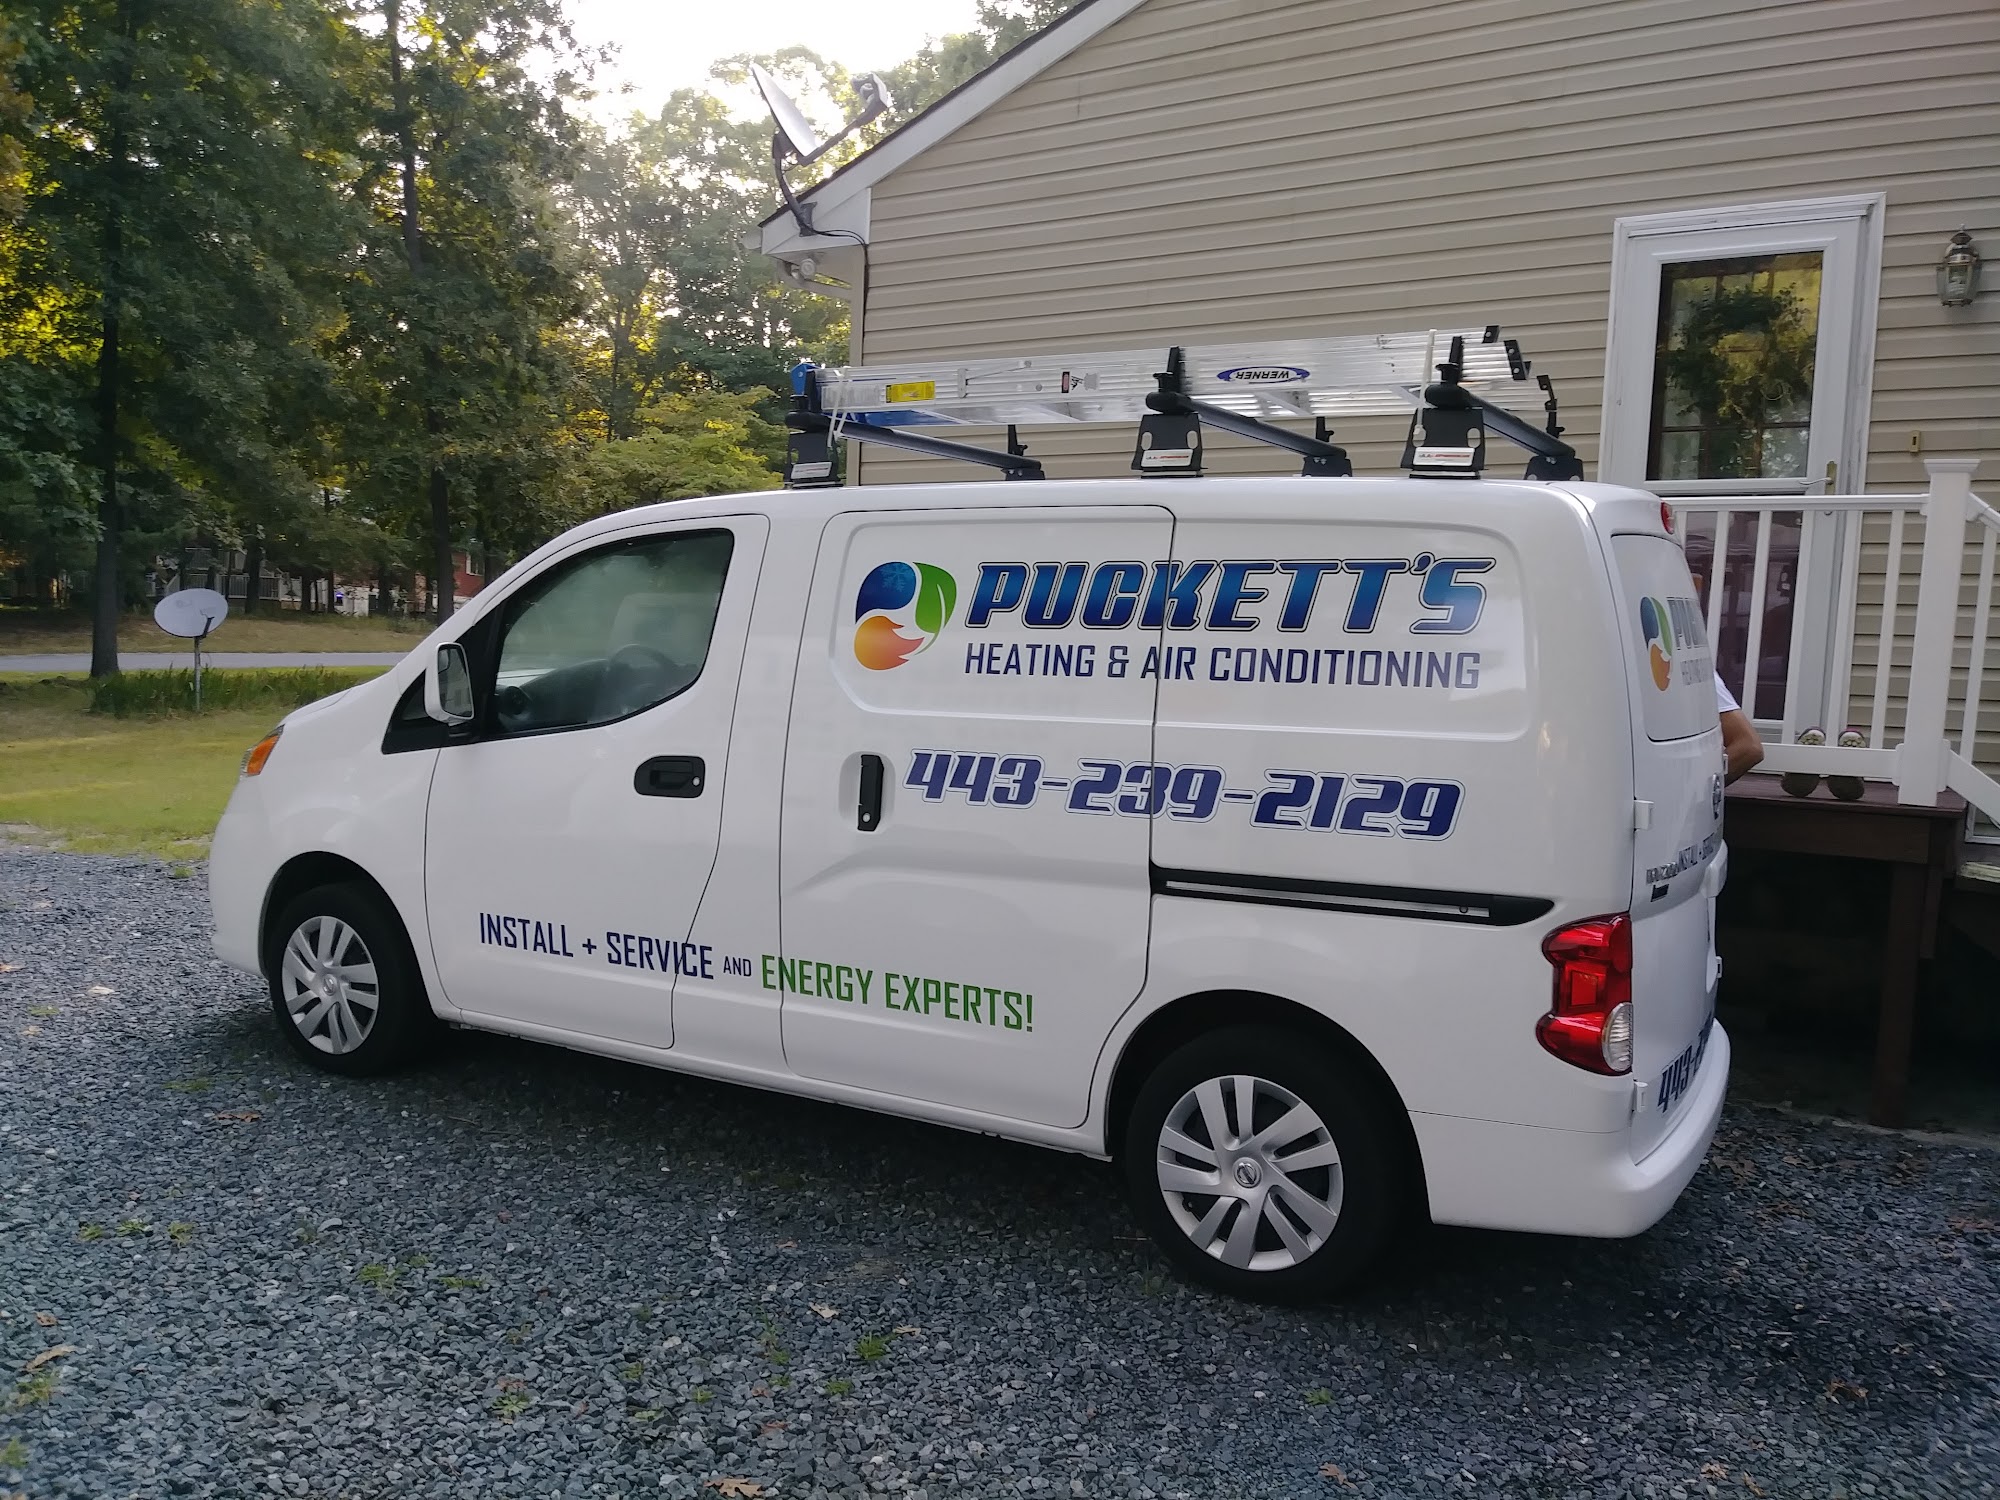 Puckett's Heating & Air Conditioning